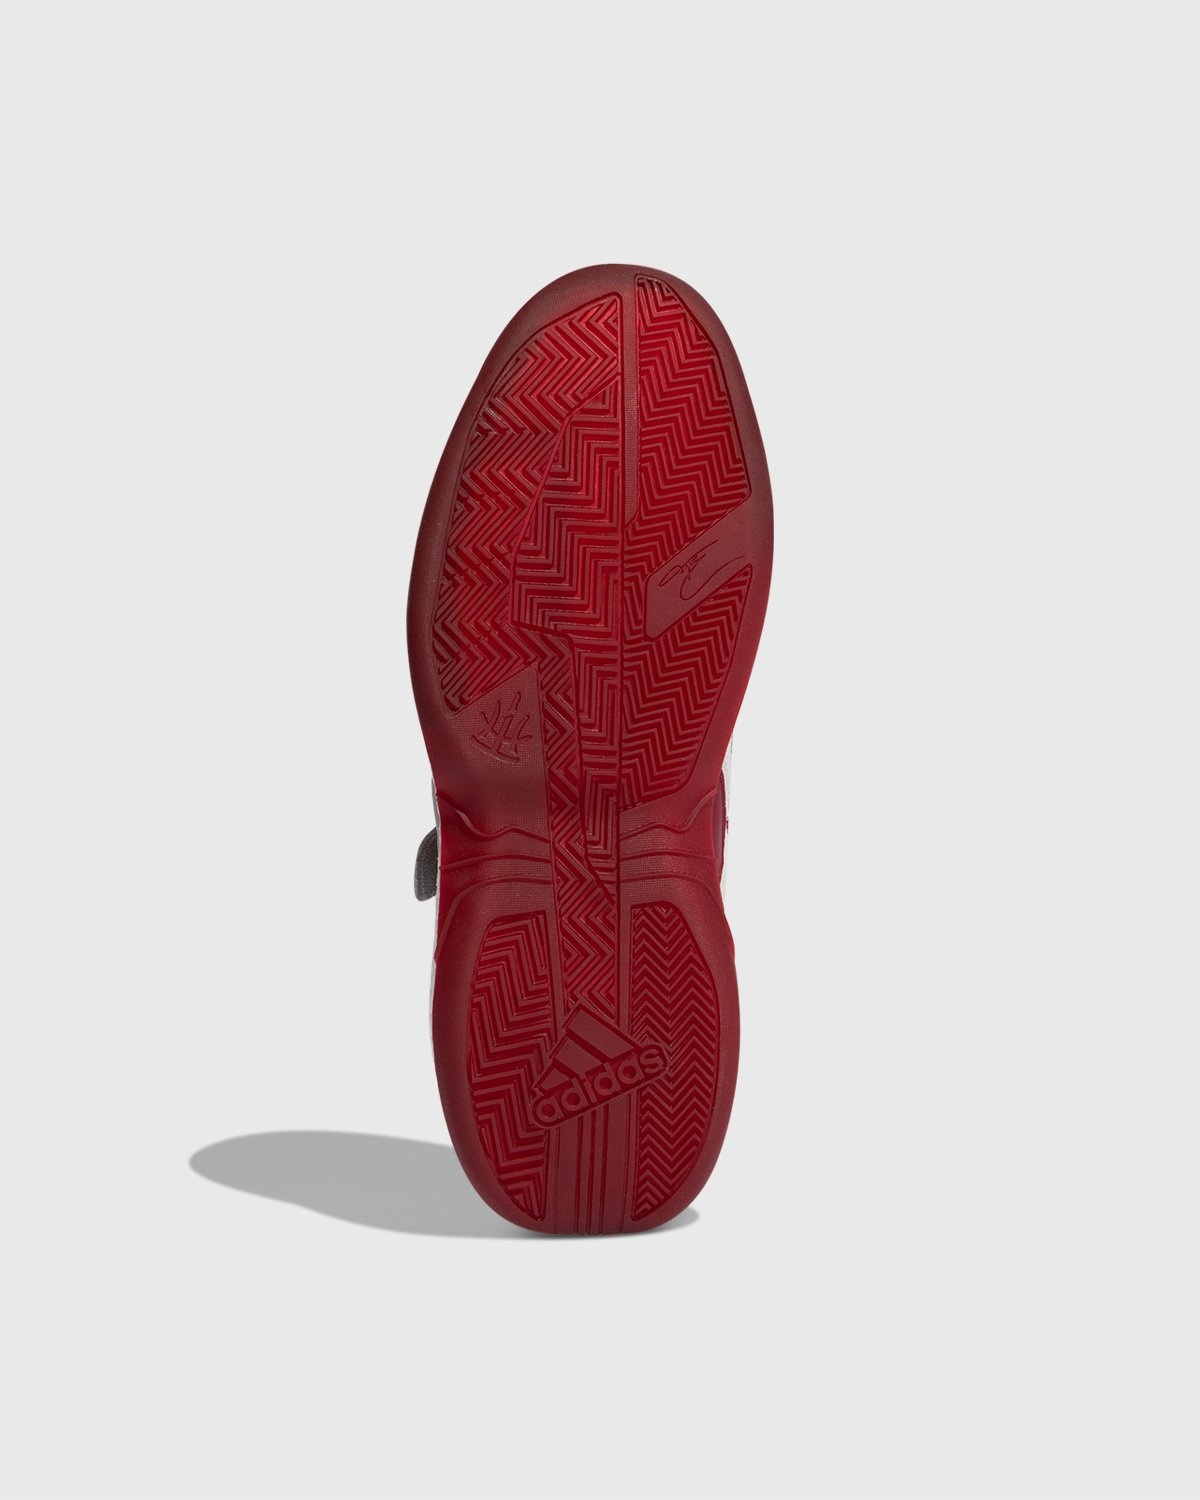 adidas Originals x Human Made – Forum Low Burgundy - Sneakers - Grey - Image 7